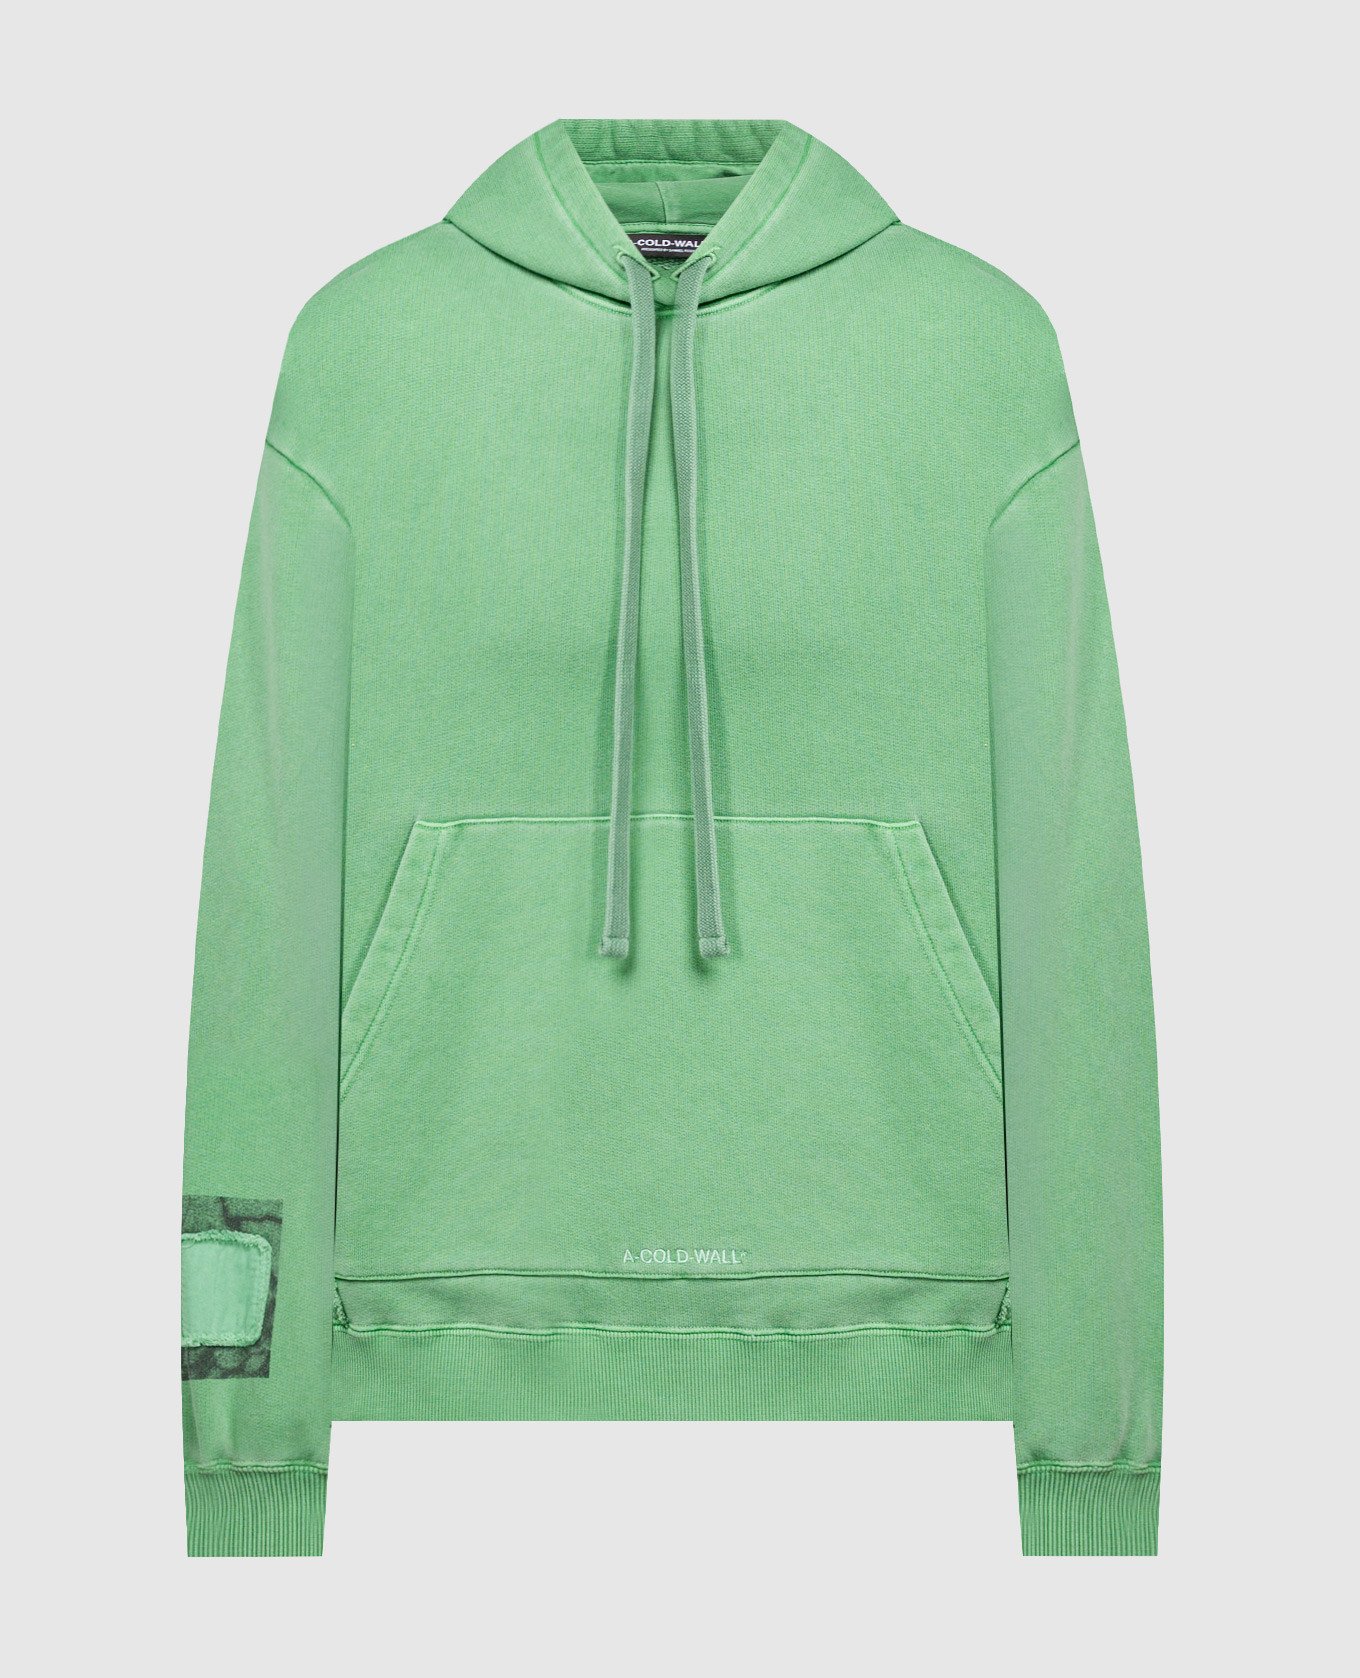 Cubist green hoodie